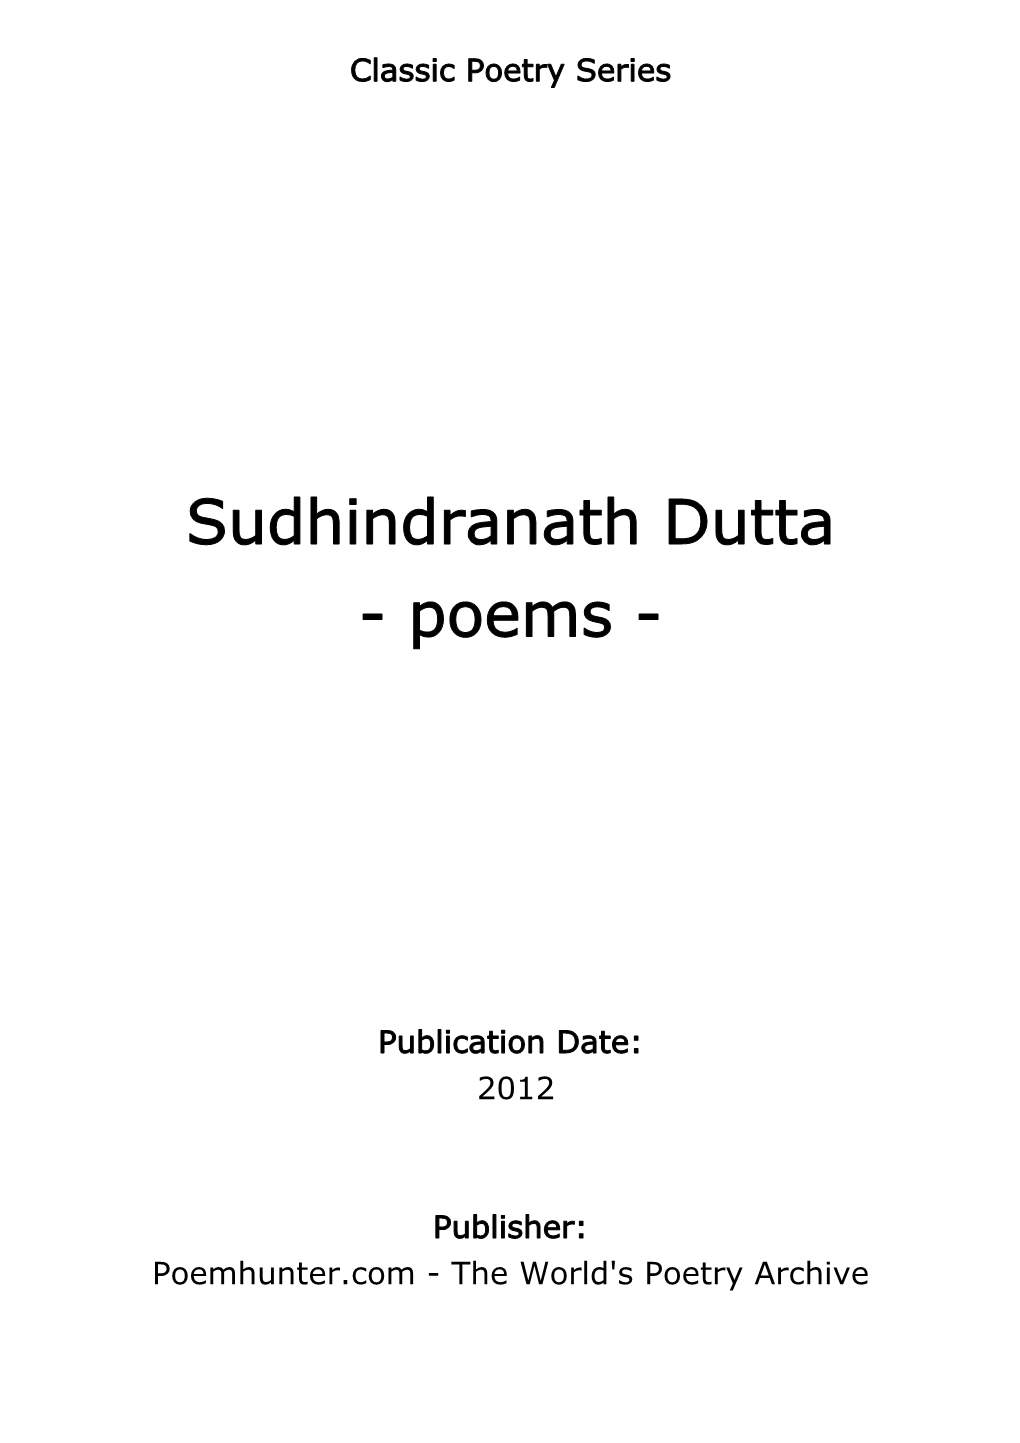 Sudhindranath Dutta - Poems